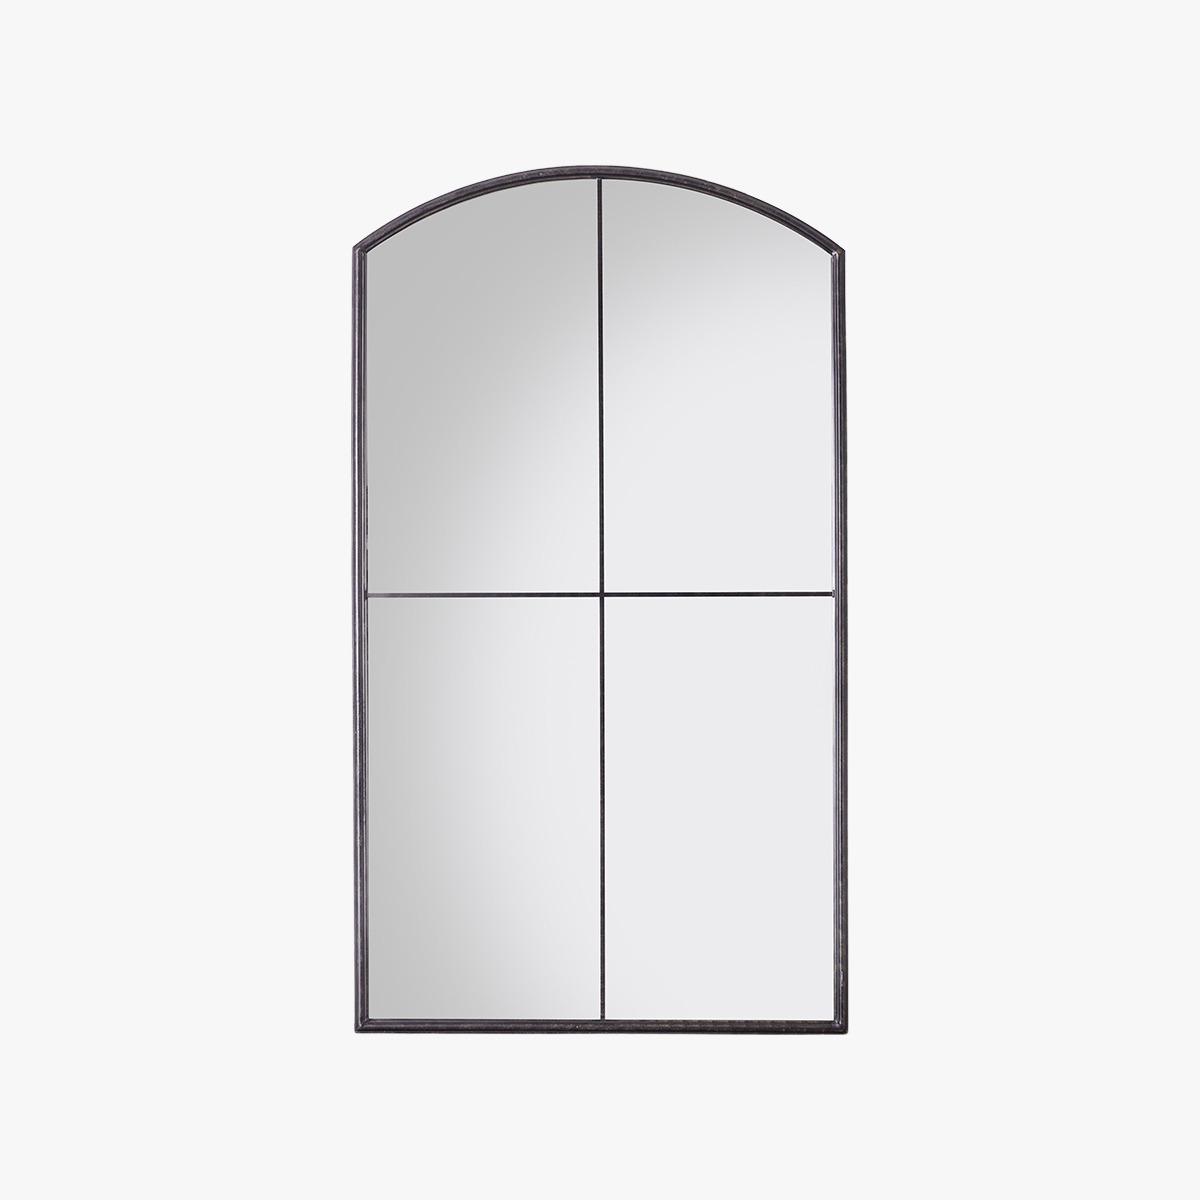 Talon Crittal Window Style Arch Mirror in Black